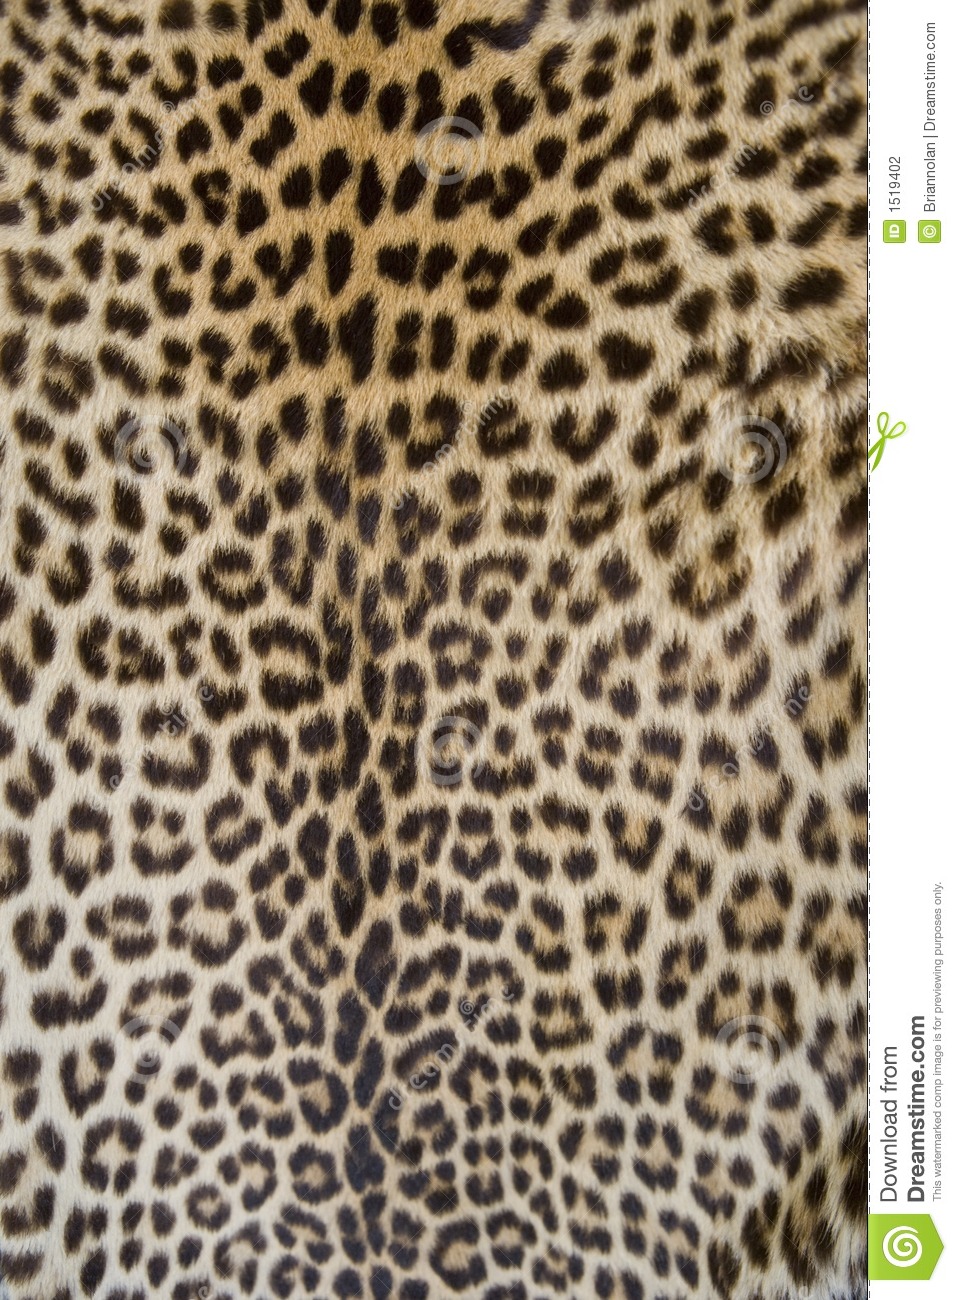 Leopard Skin Backgrounds on Wallpapers Vista